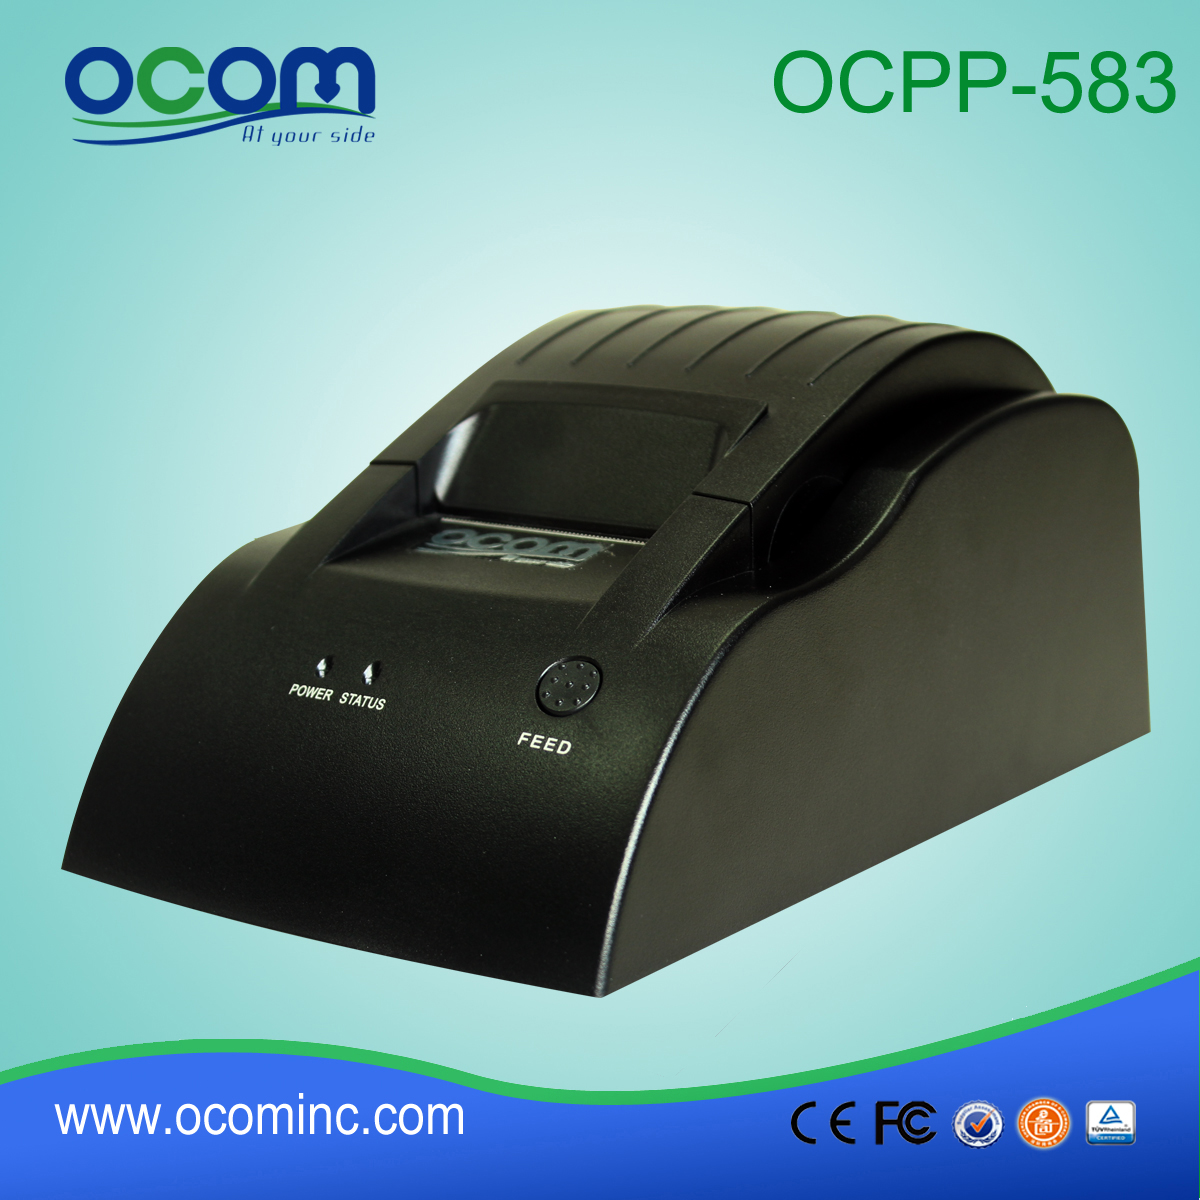 OCPP-583: 2015 de alta calidad barato módulo de impresora térmica